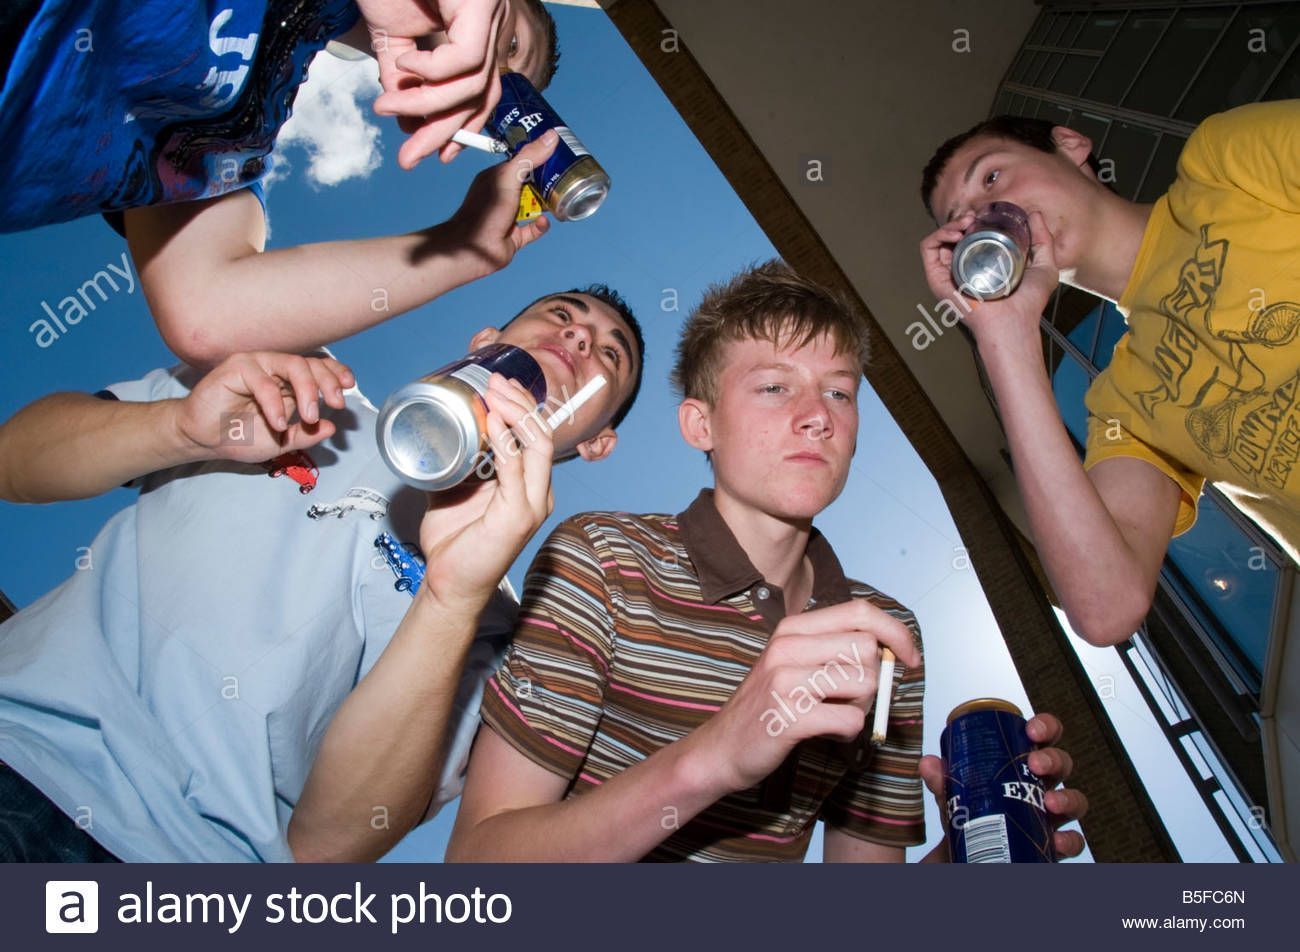 Teen age drinking